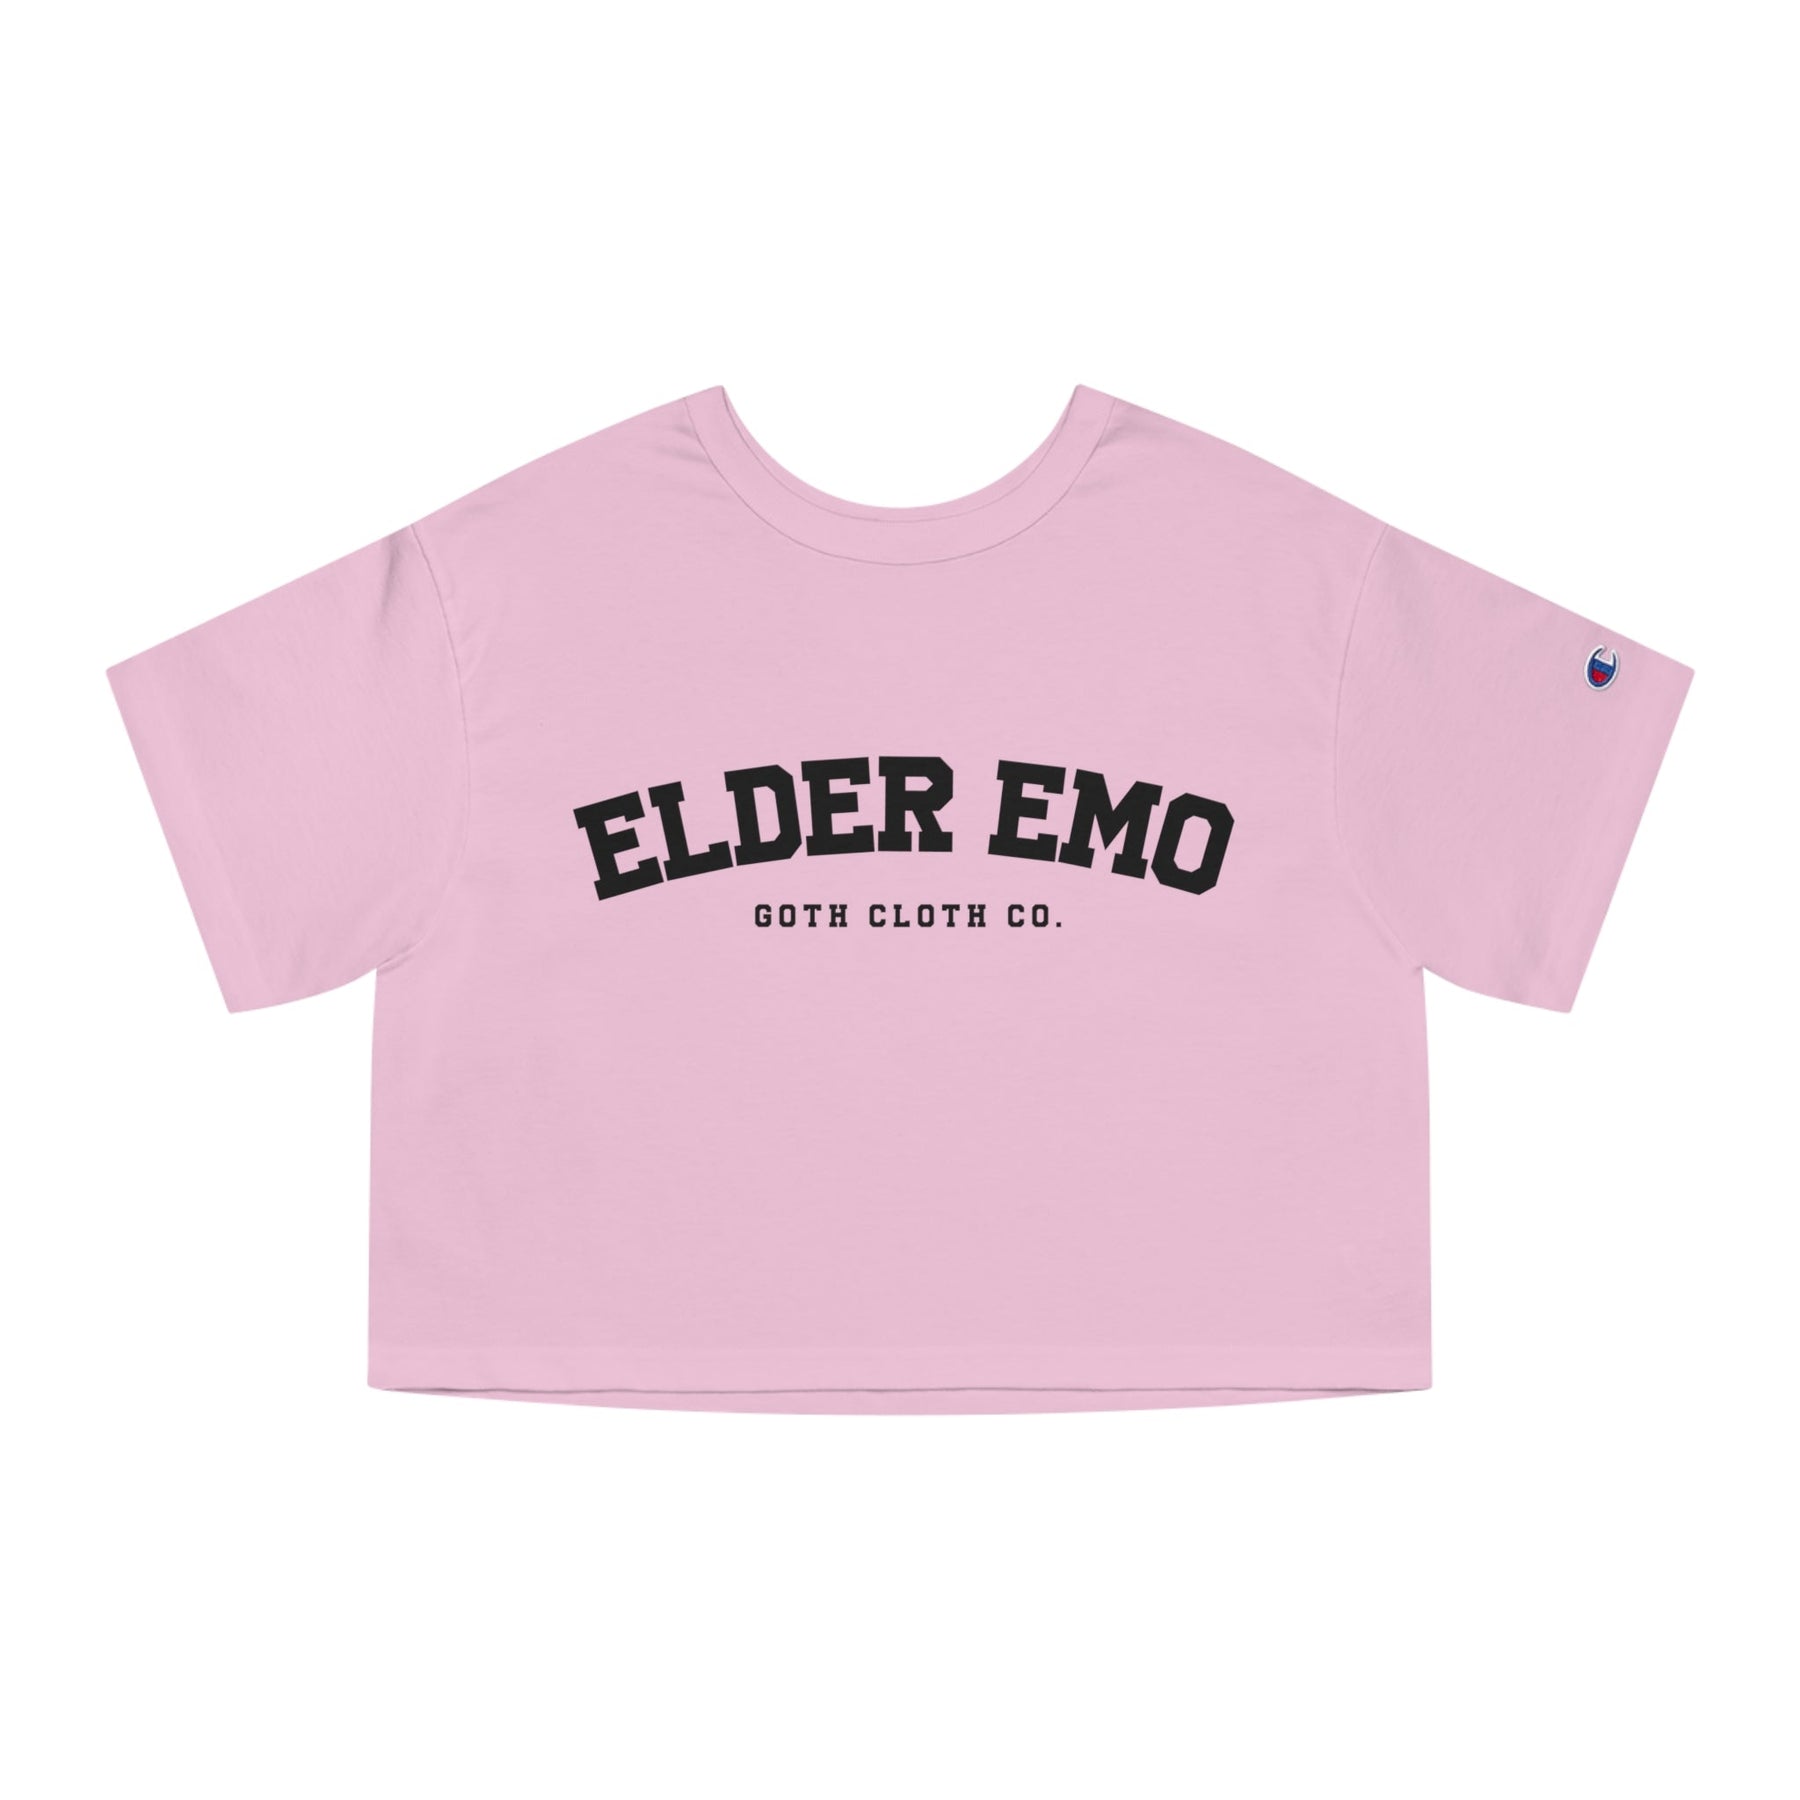 Elder Emo College Heavyweight Cropped T-Shirt - Goth Cloth Co.T-Shirt26590799765004498278